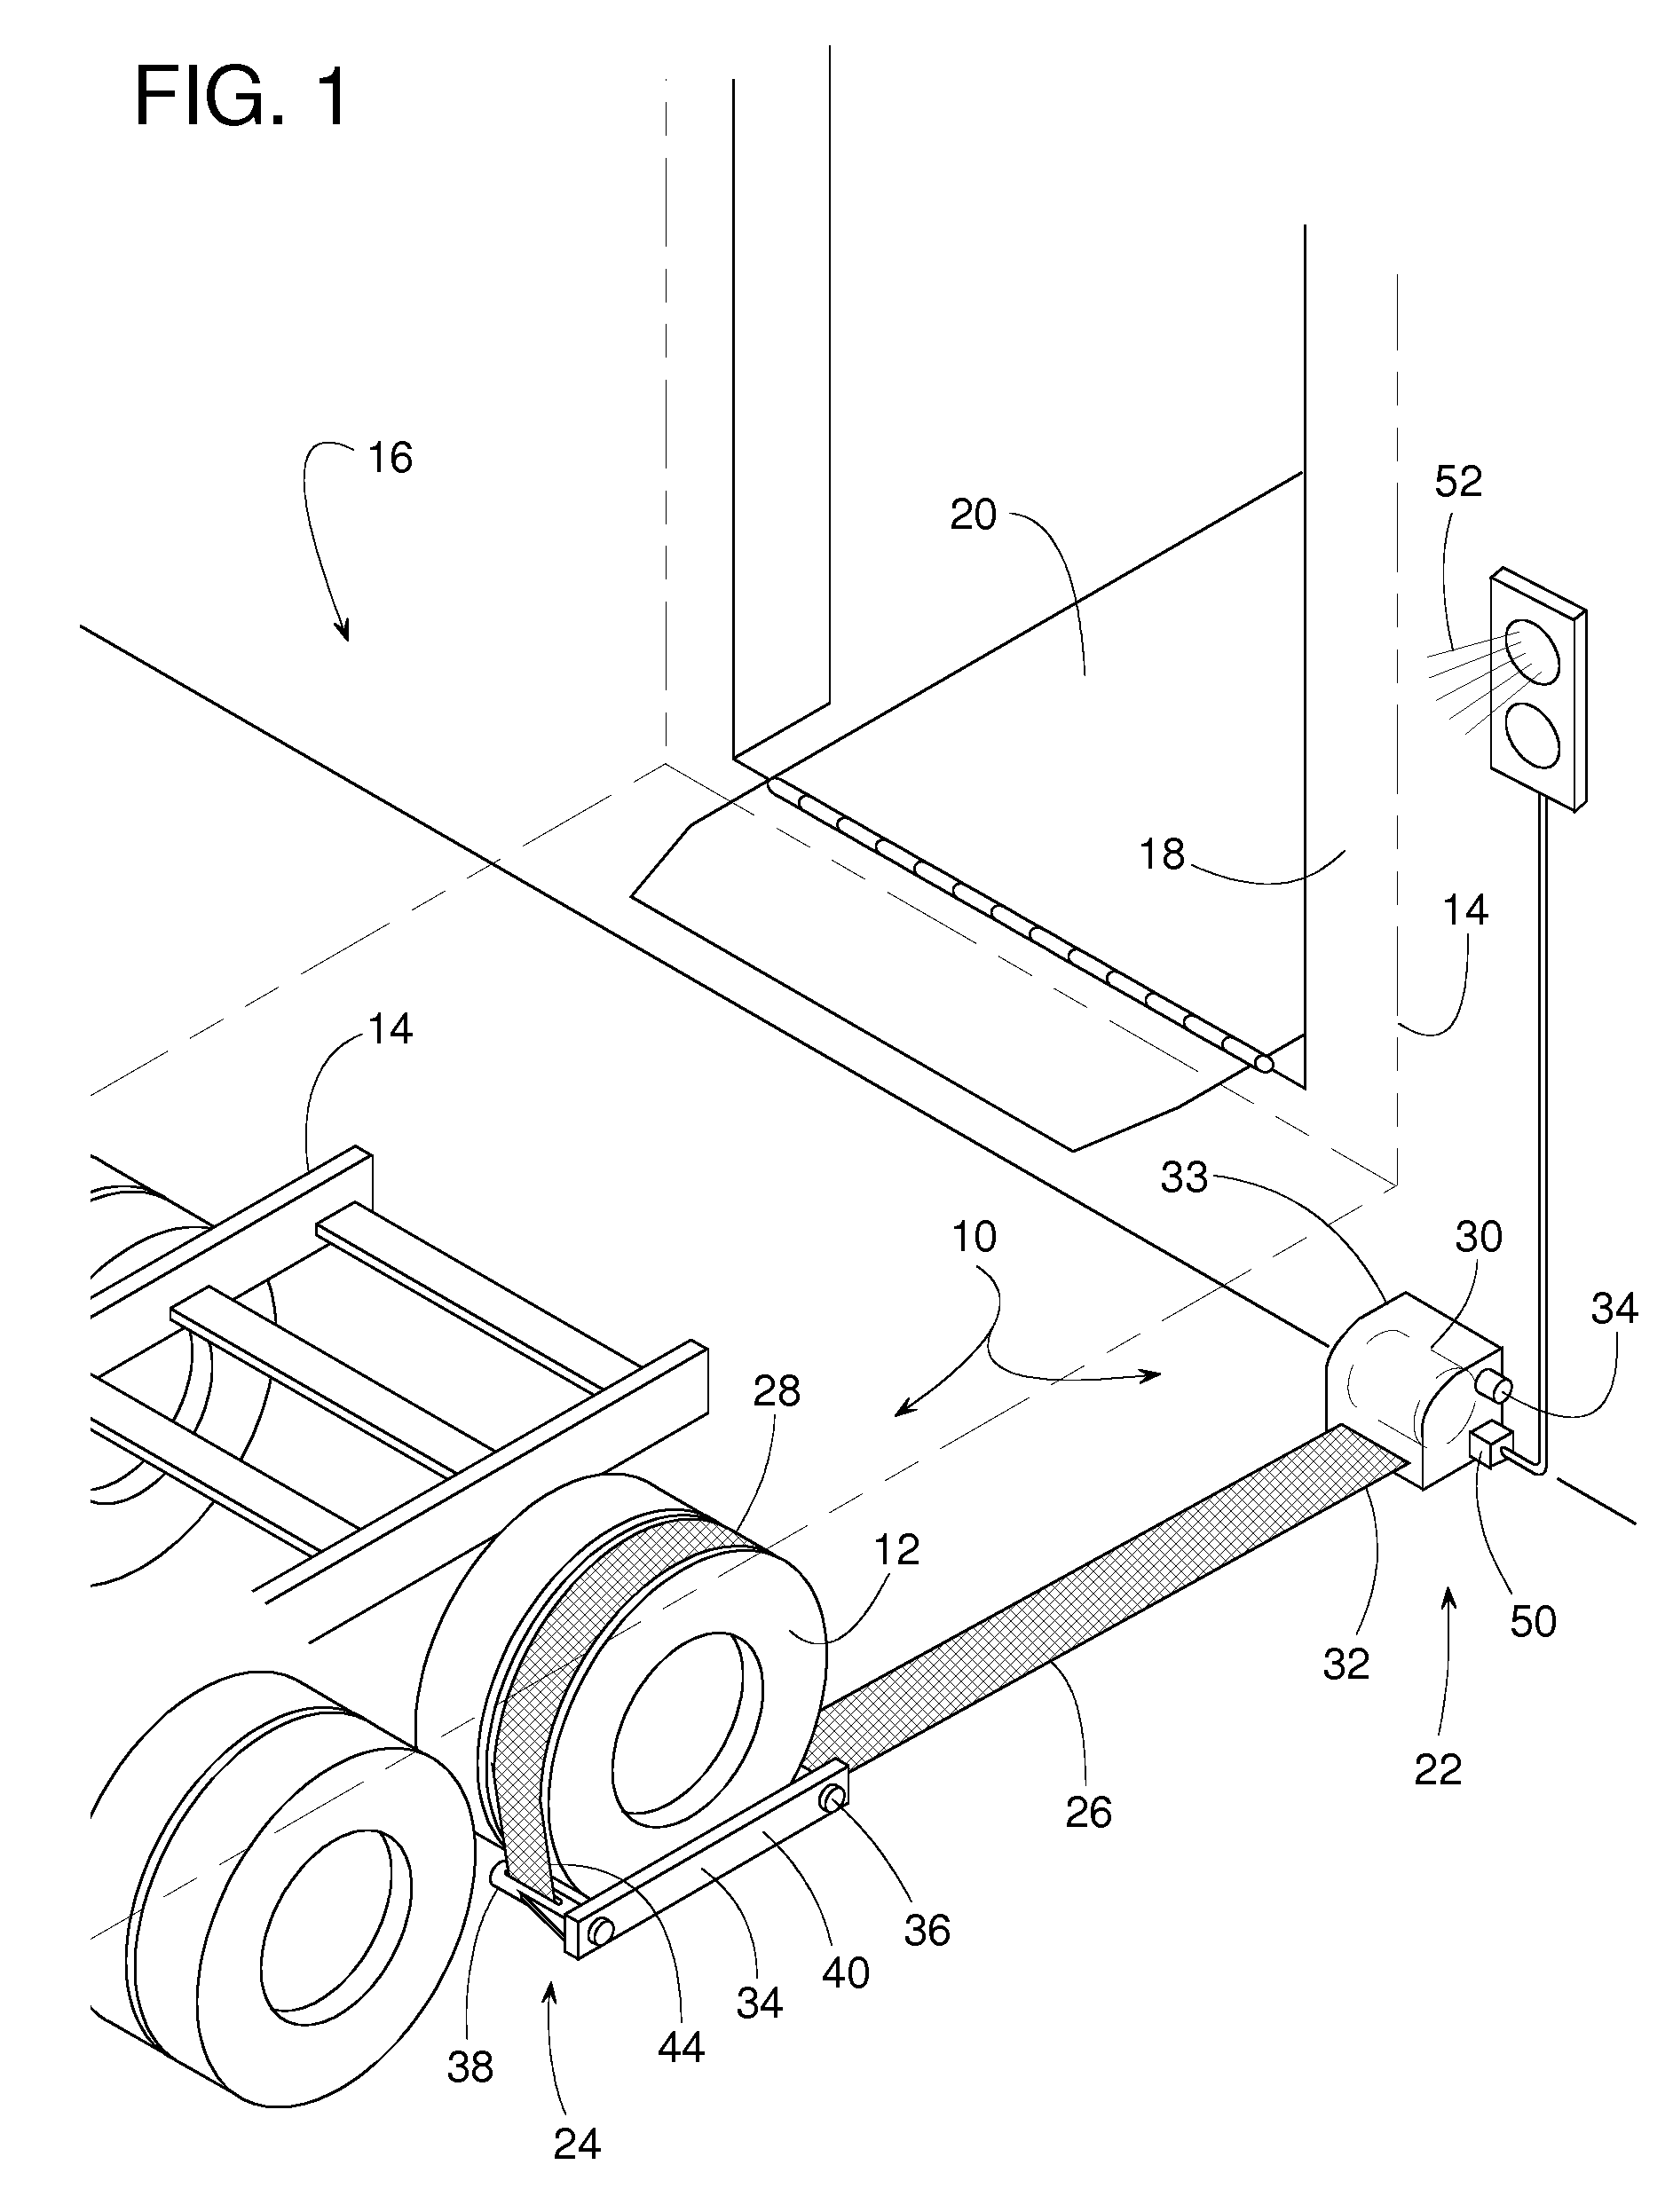 Loading dock wheel restraint comprising a flexible elongate member